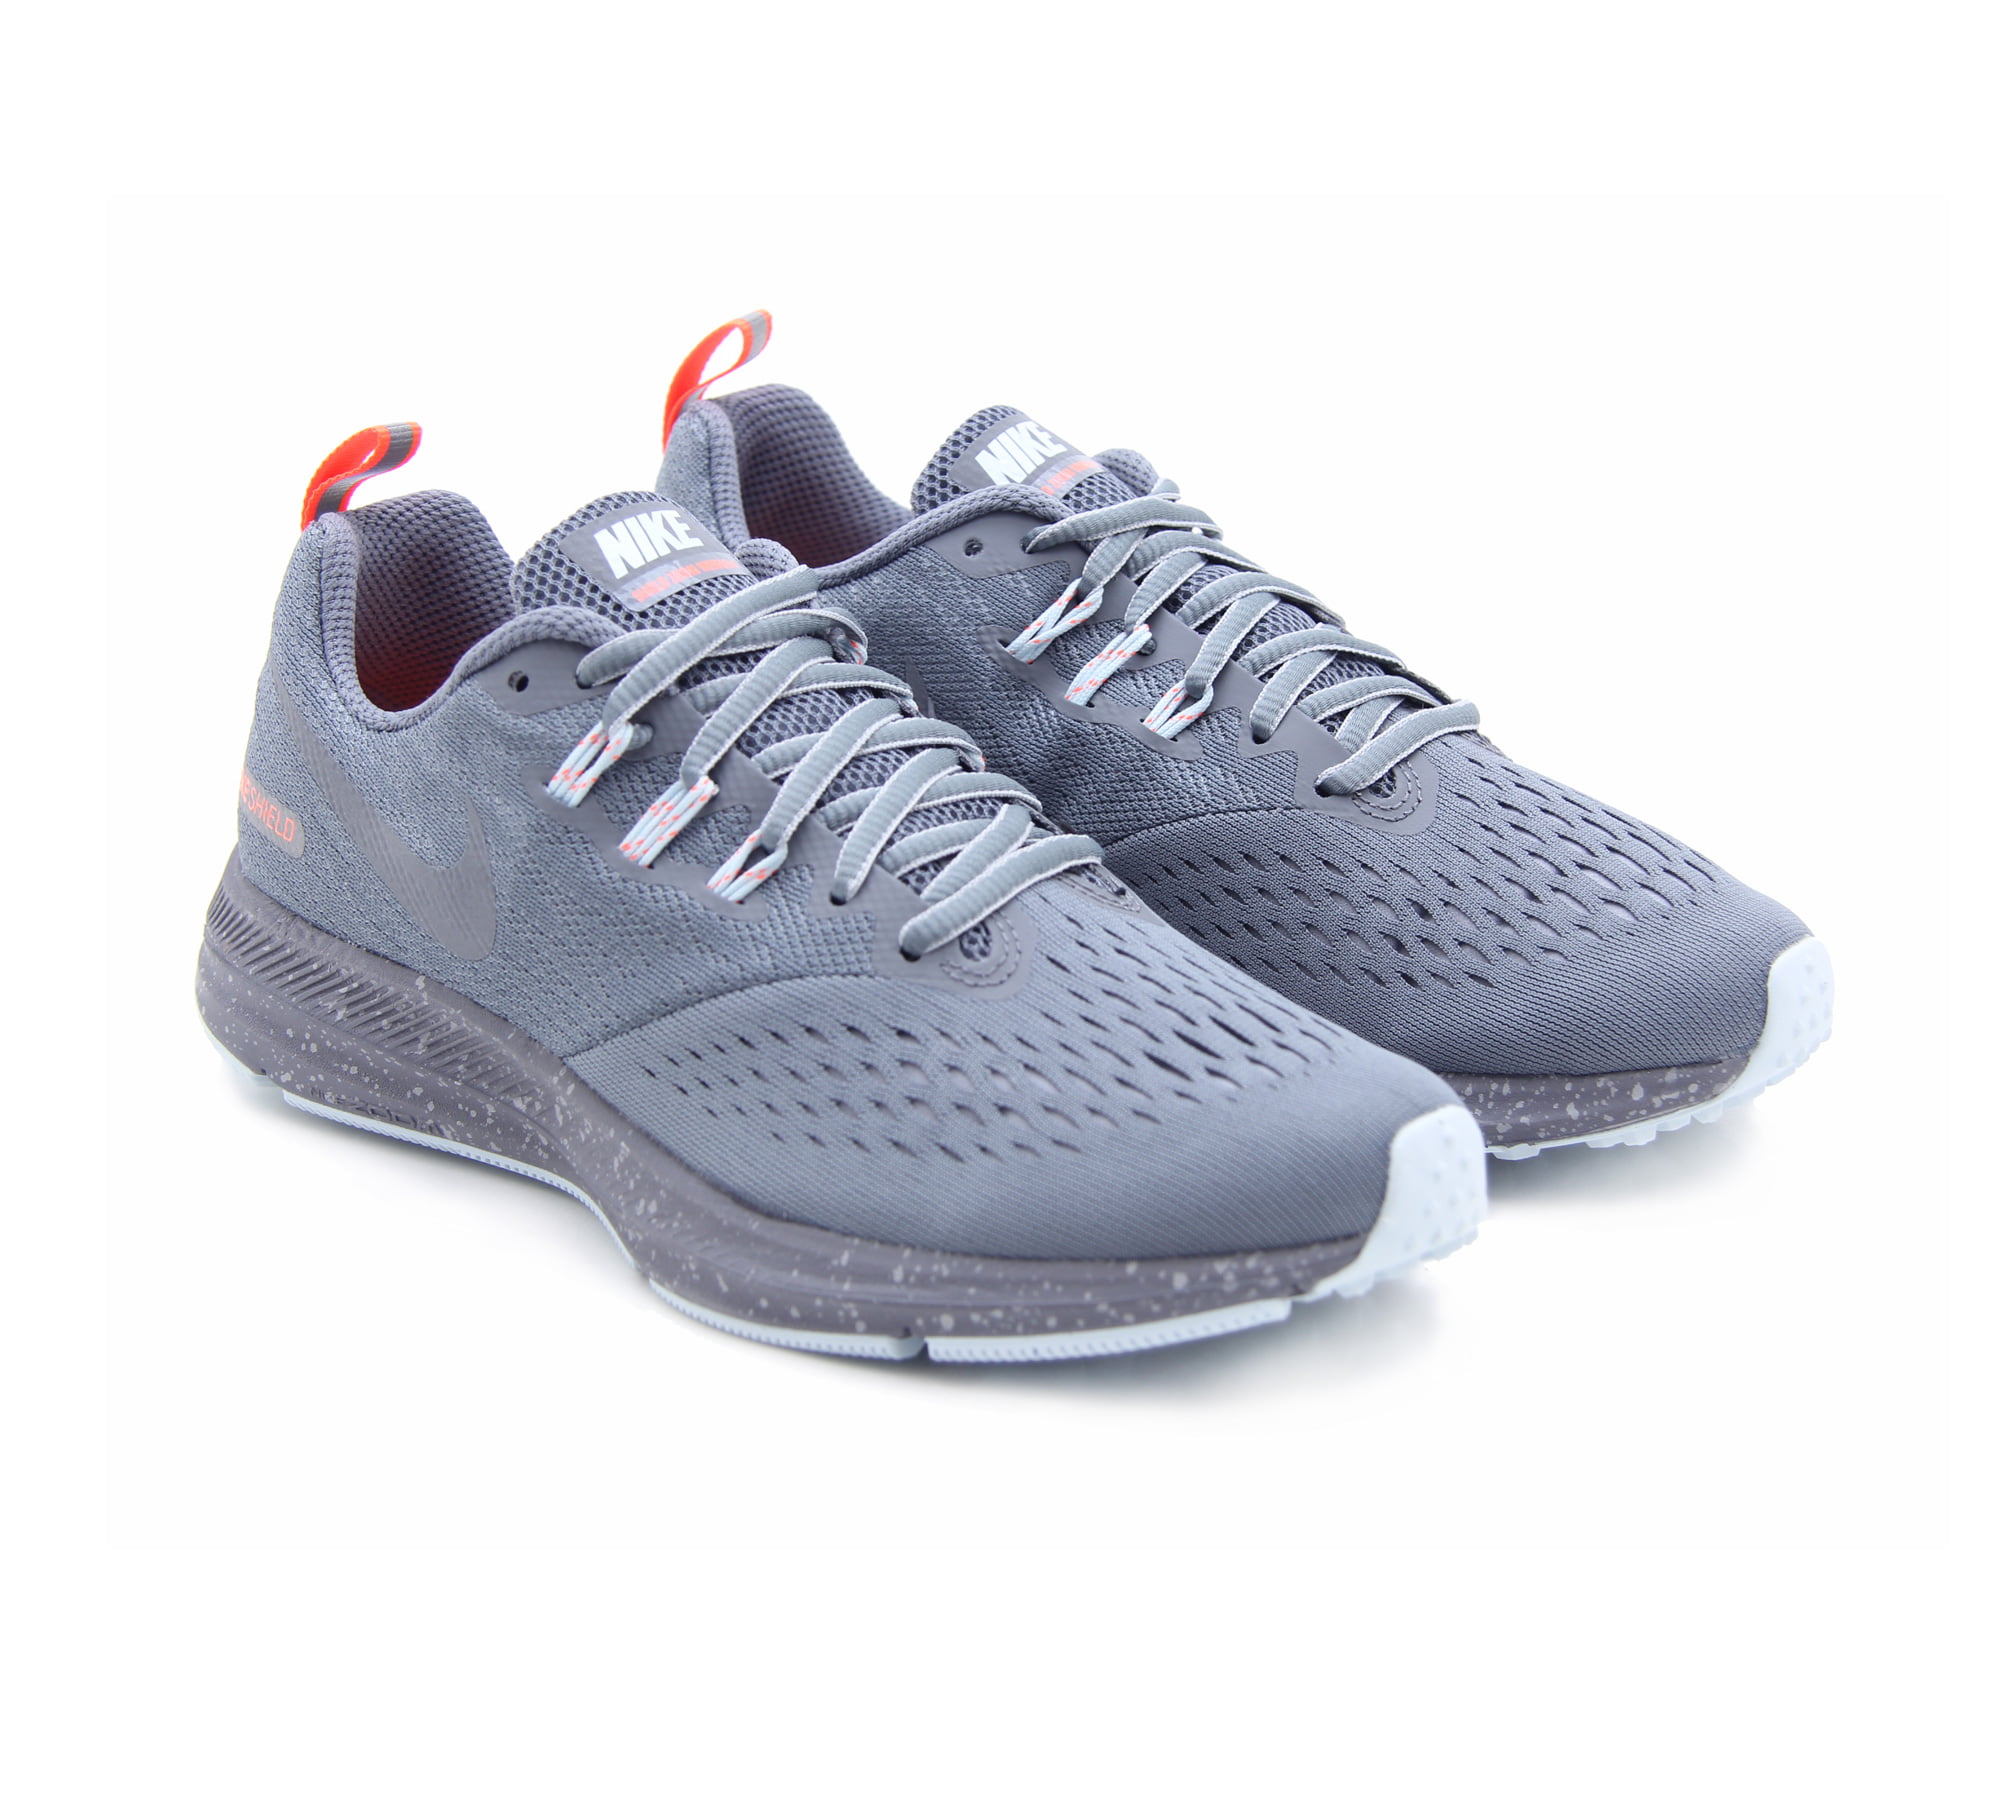 Nike Zoom Winflo 4 Shield Women's Size 7.5 Running Shoes 921721 004 Cool Grey -